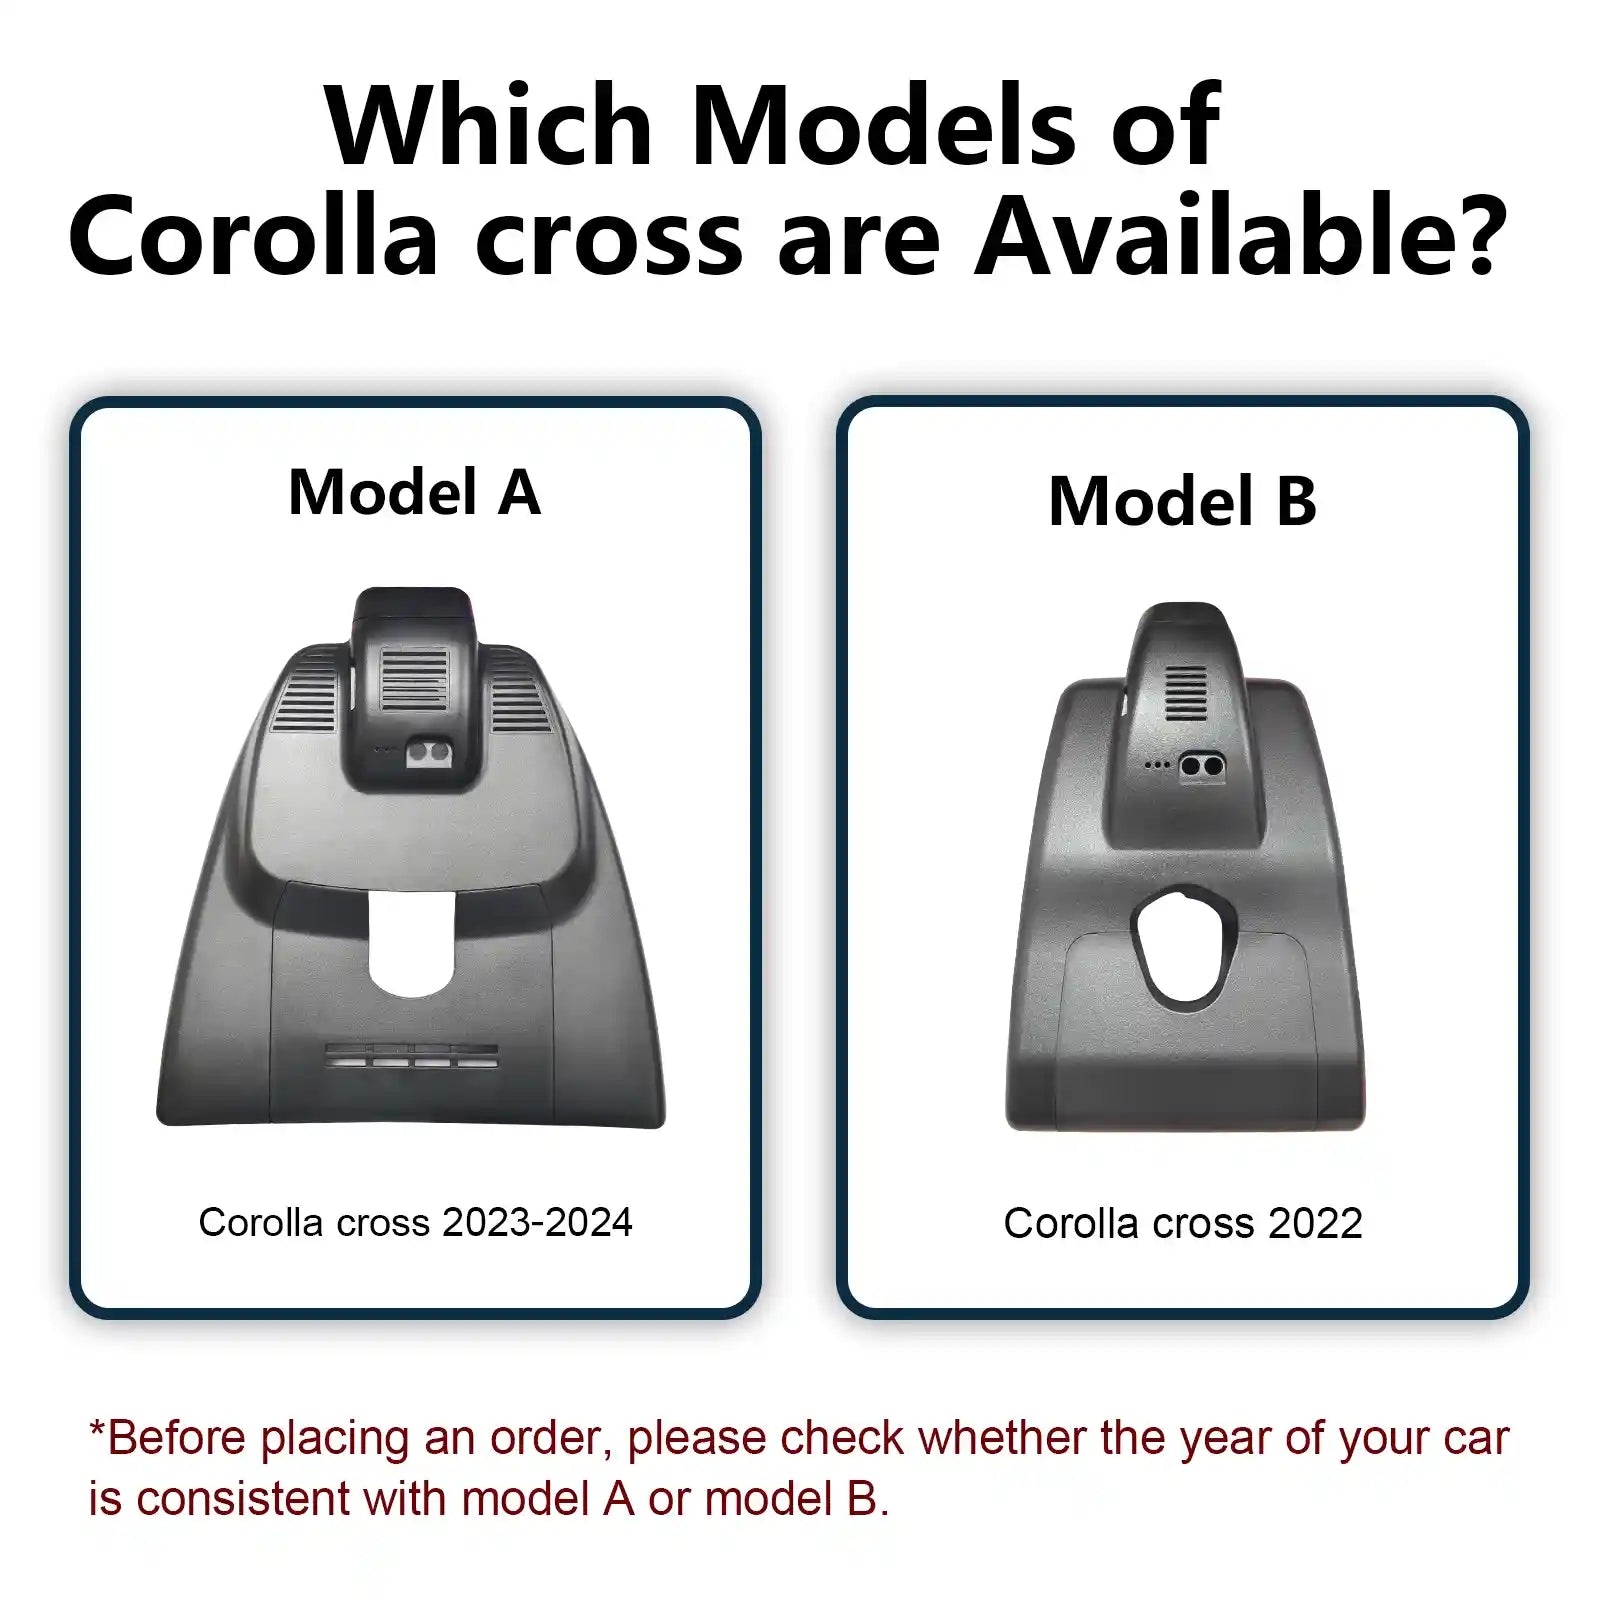 Mangoal 4K Dash Cam Custom fit for Toyota Corolla Cross 2022 (Model B), LE L XLE, Integrated OEM Look, 2160P UHD Video, Built-in WiFi & APP, Loop Recording, Gravity Sensor, Easy to Install